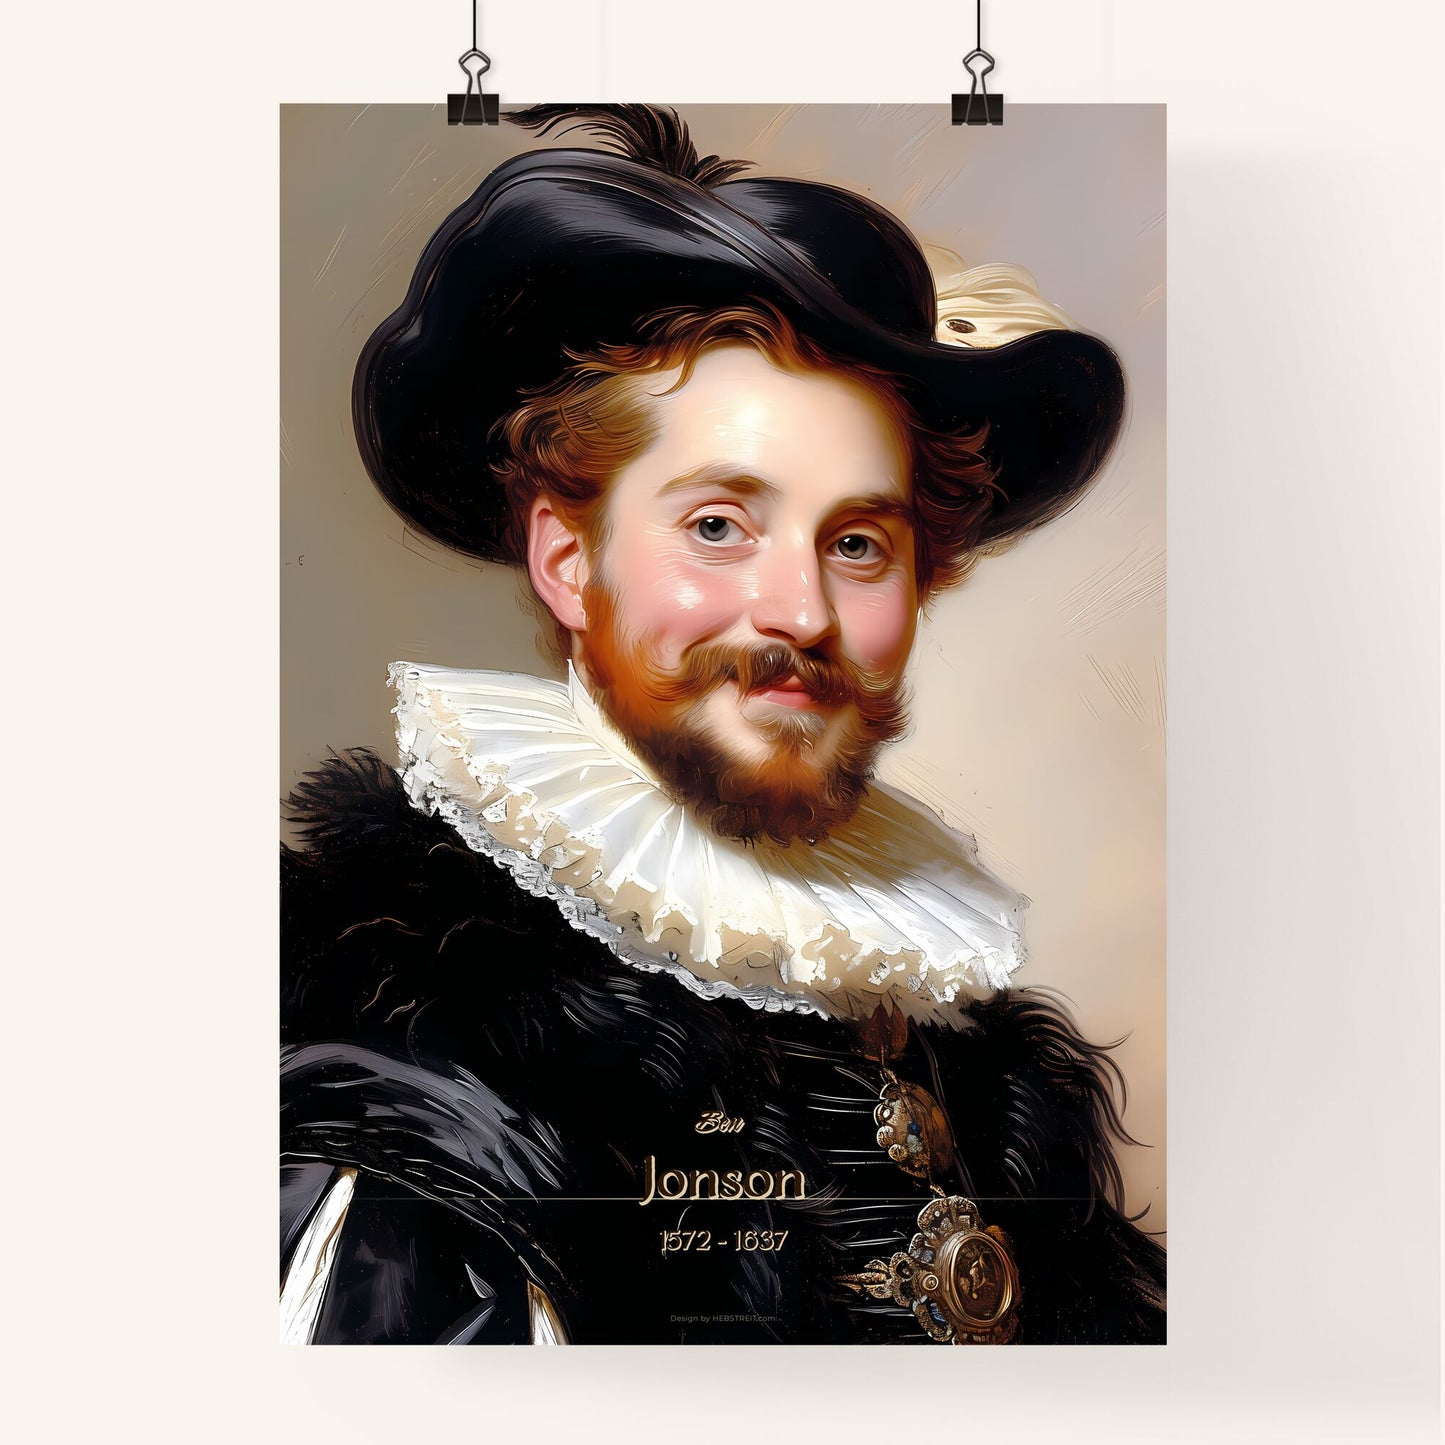 Ben, Jonson, 1572 - 1637, A Poster of a man in a hat Default Title